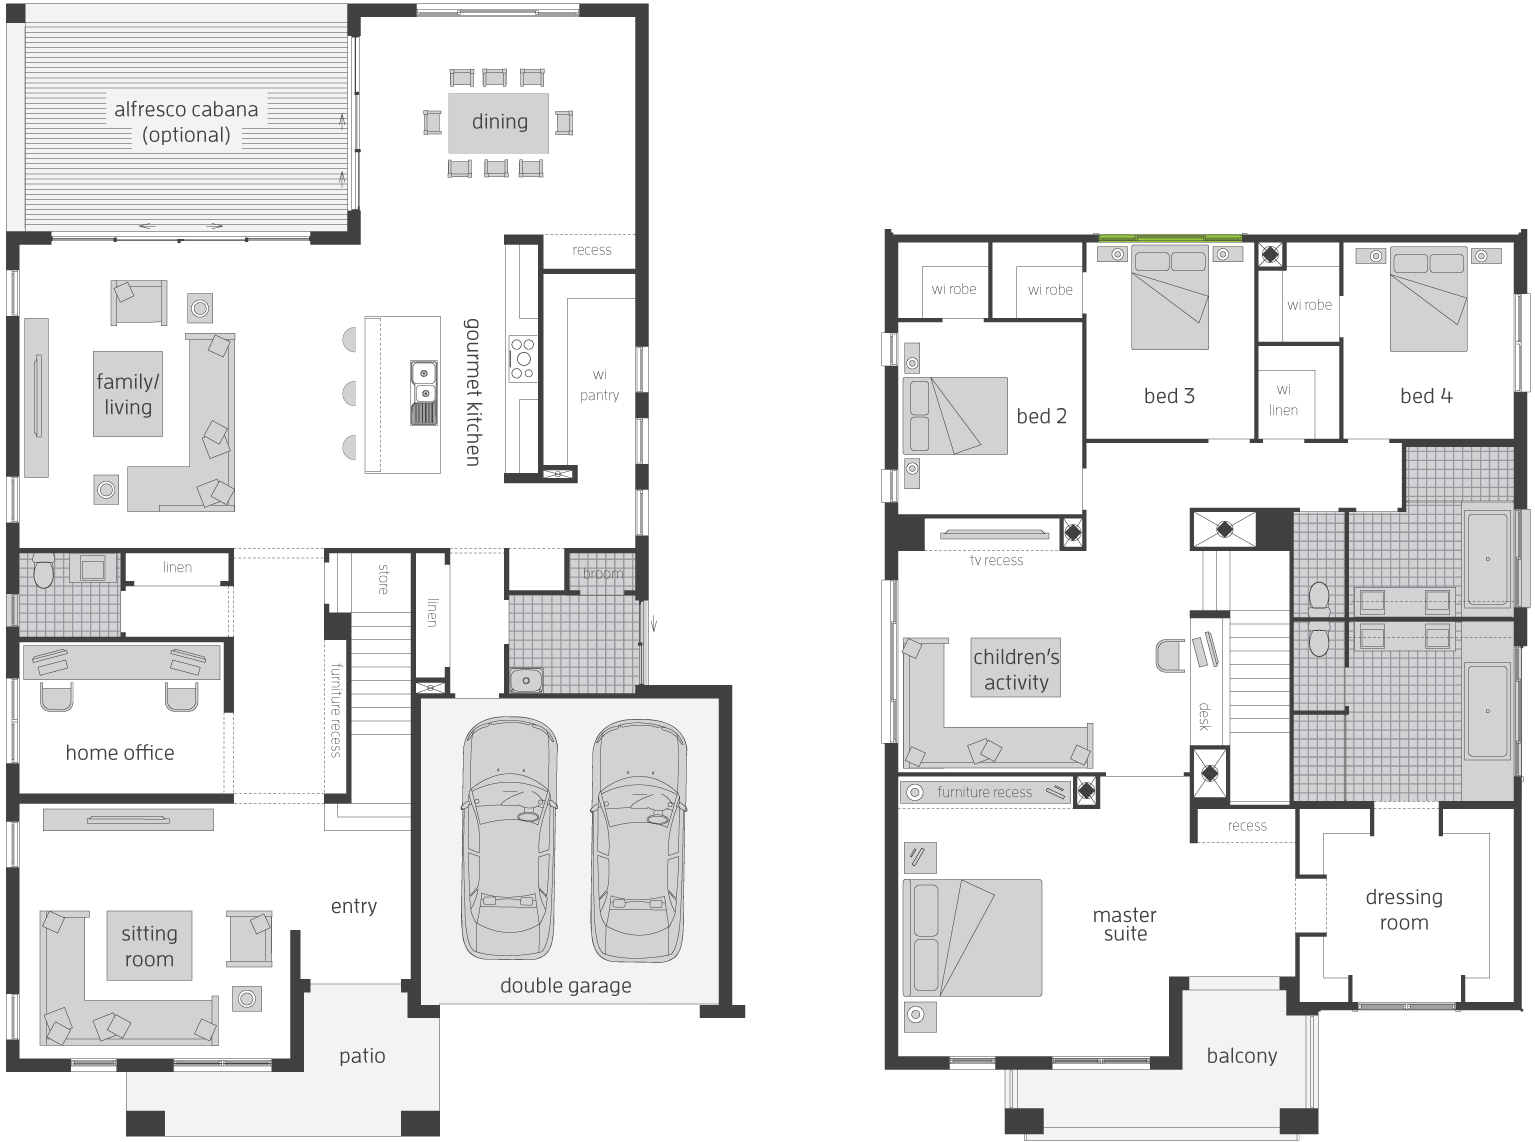 Floor Plan - Tallavera 45 Double Storey Home - McDonald Jones